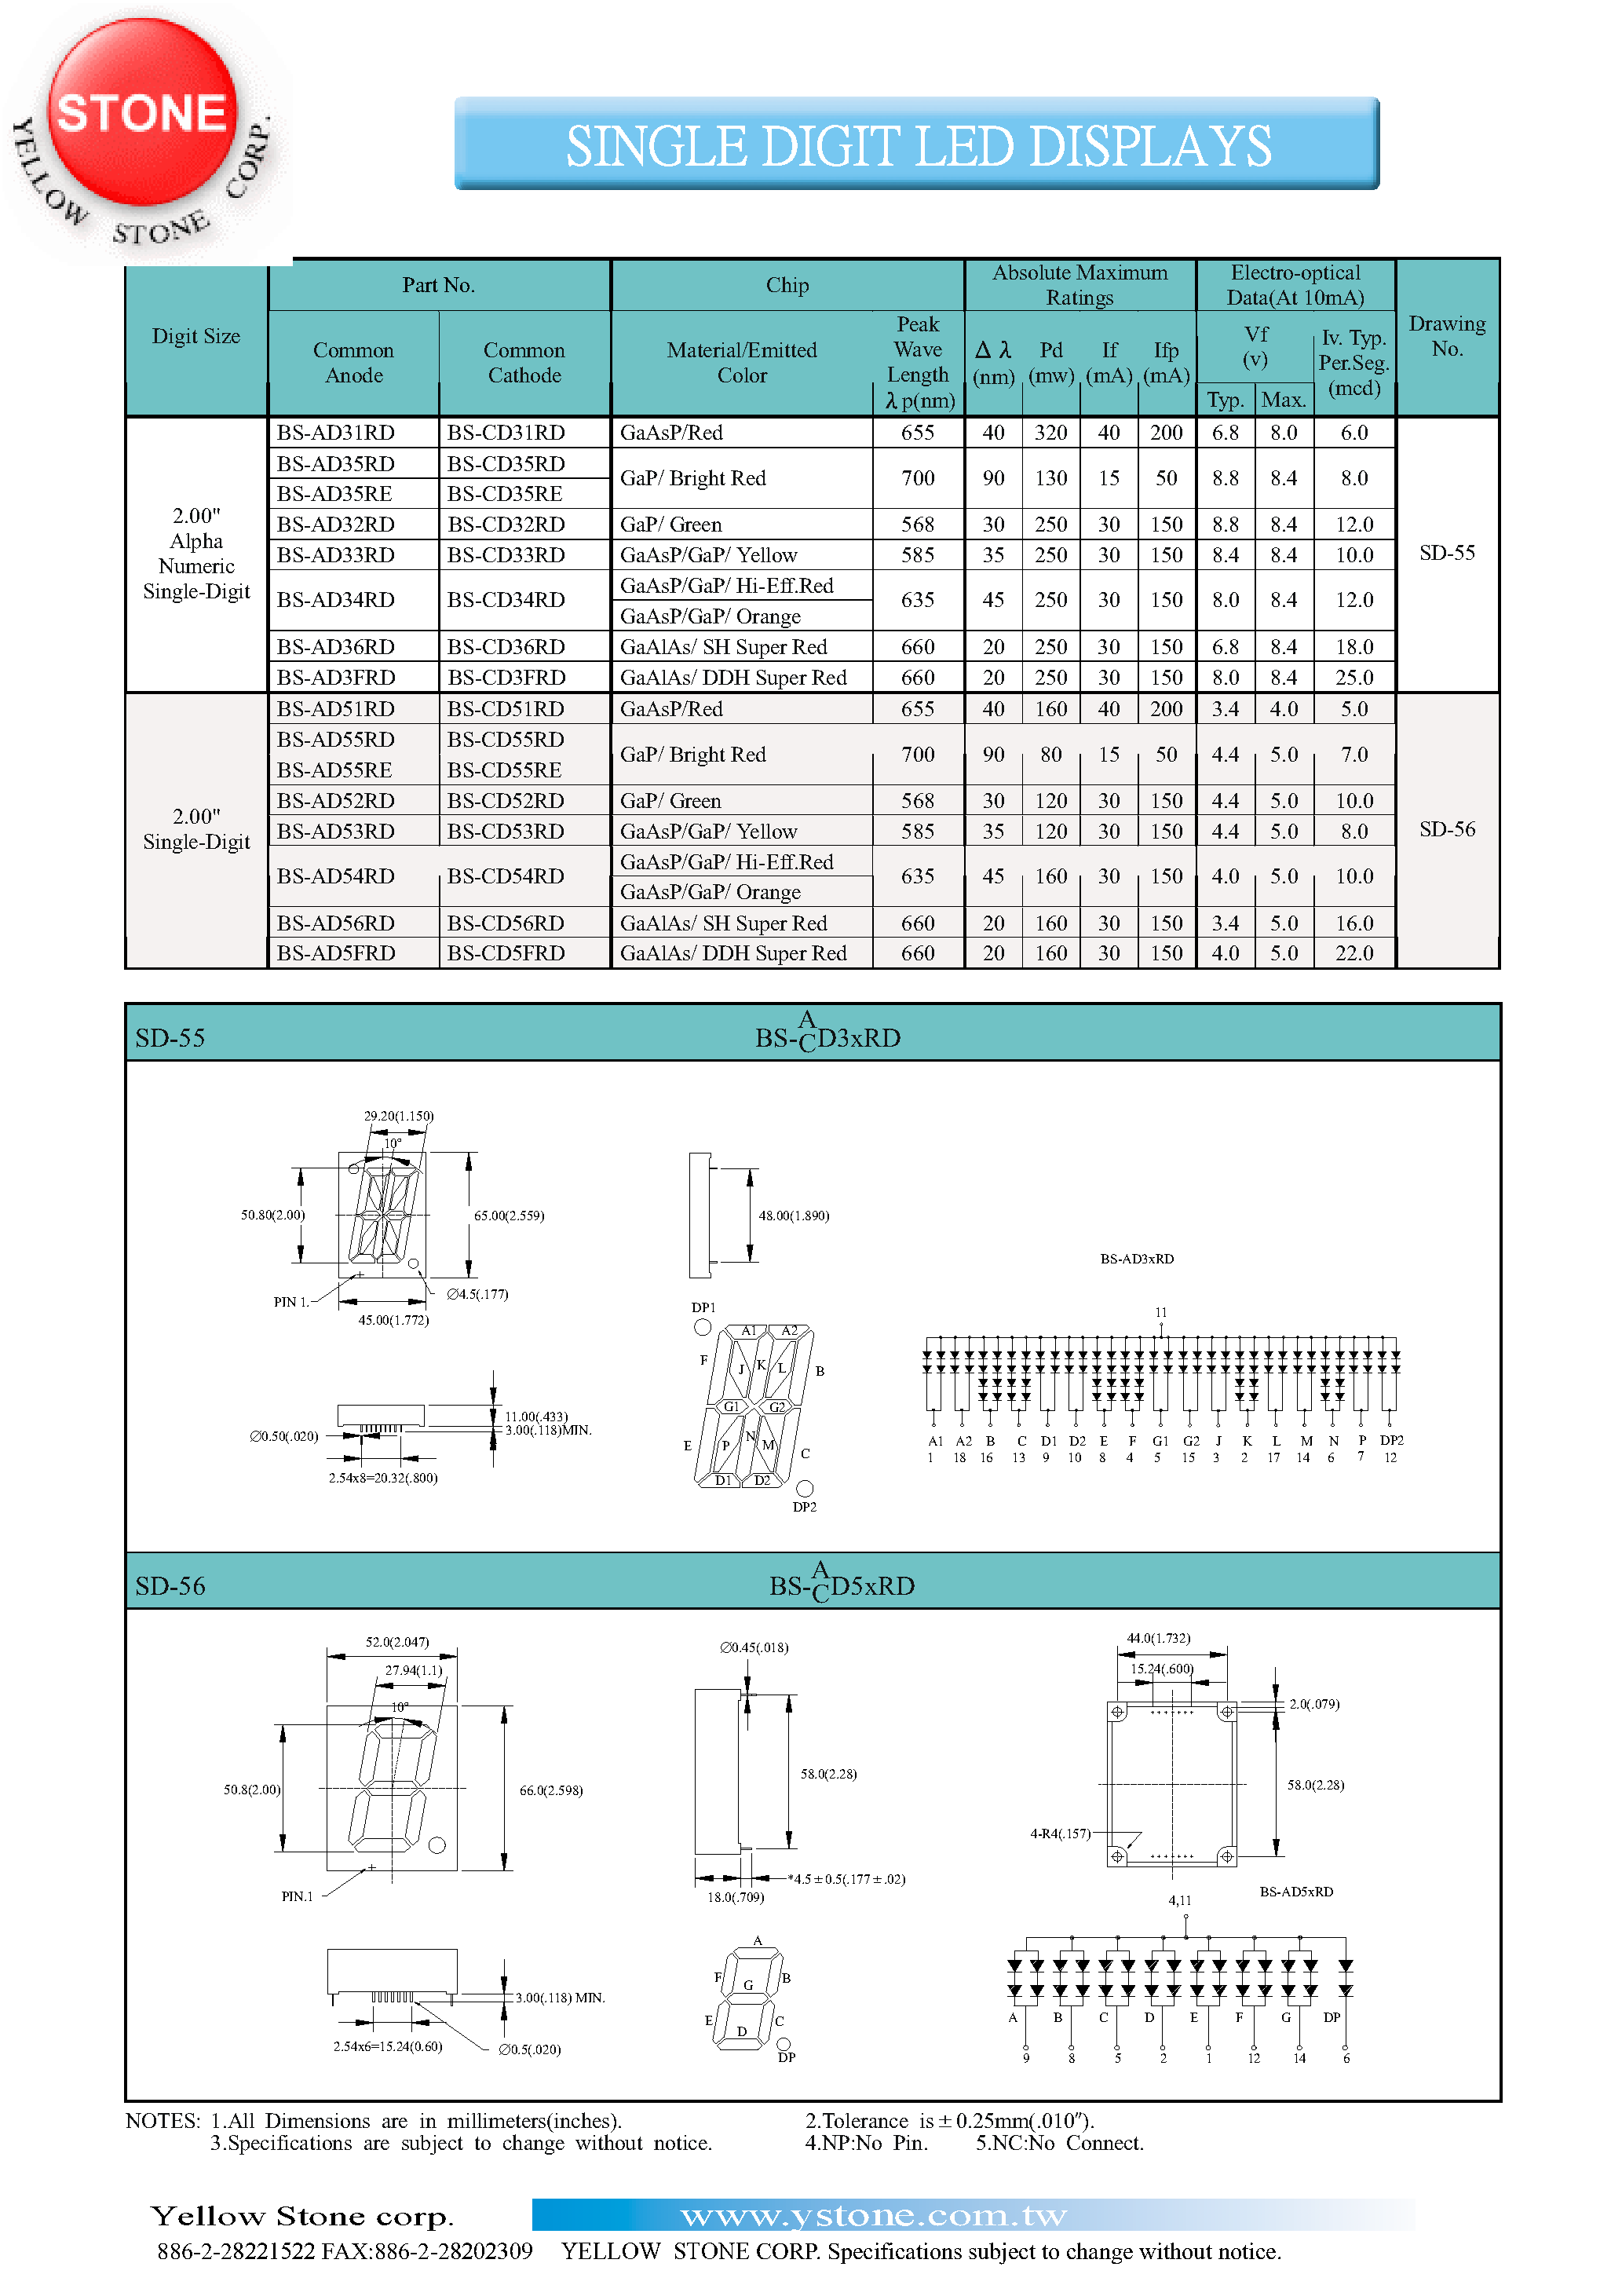 Datasheet BS-AD52RD - SINGLE DIGIT LED DISPLAYS page 1